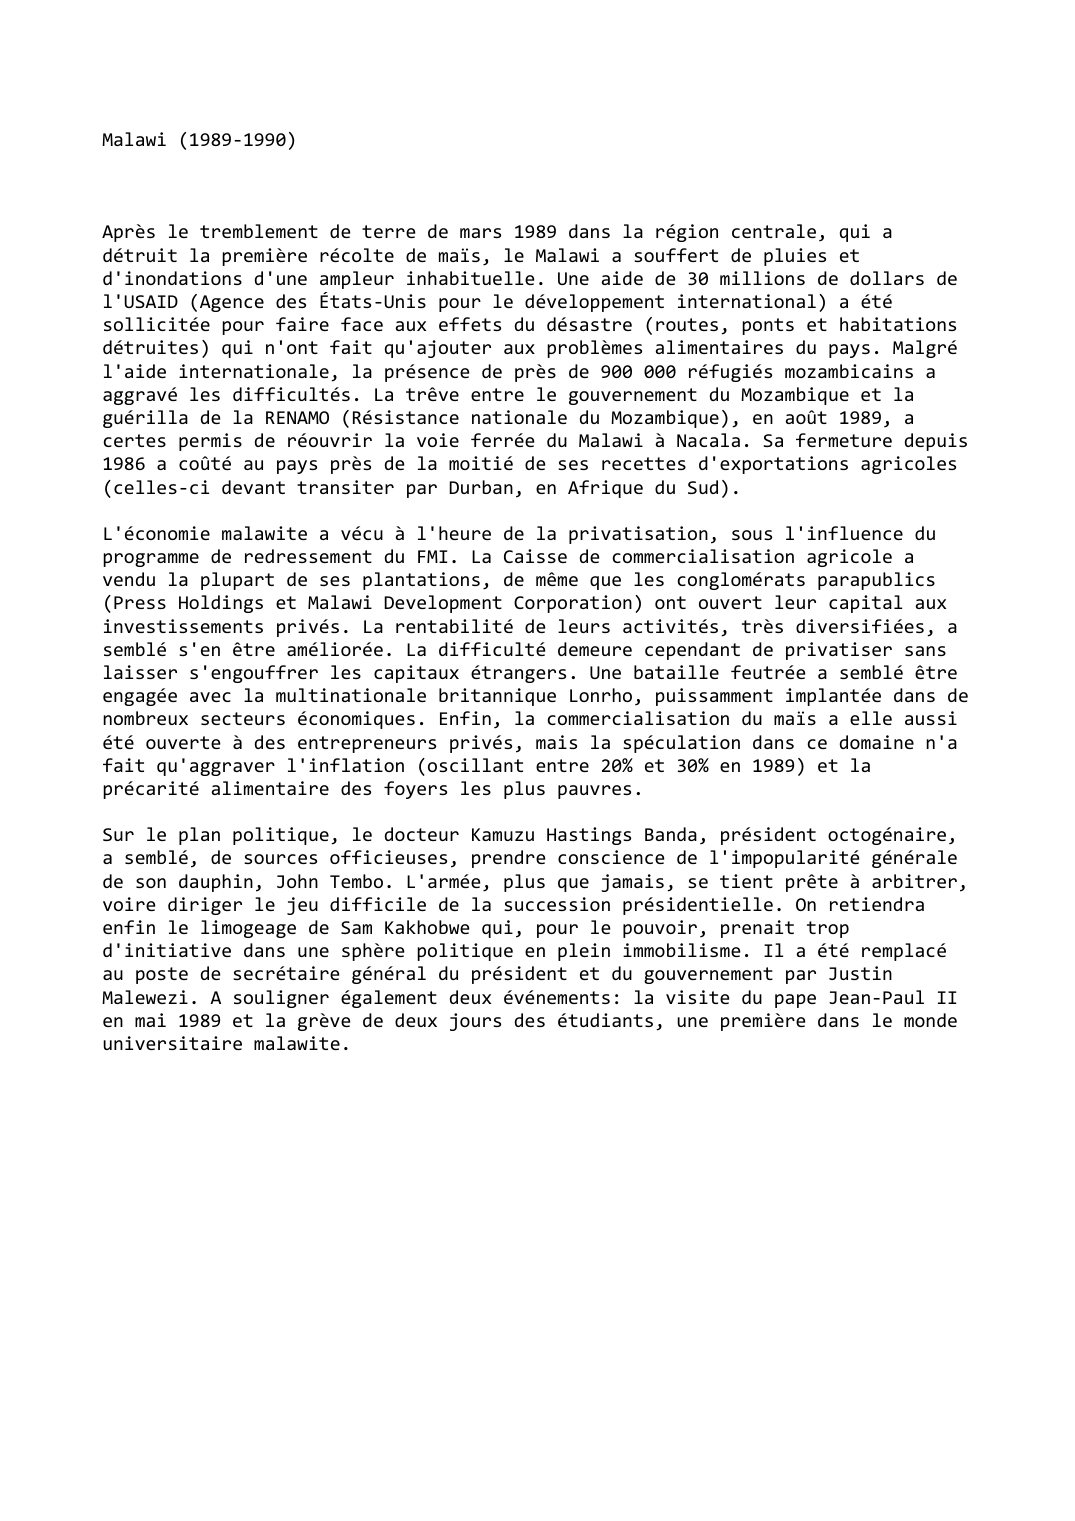 Prévisualisation du document Malawi (1989-1990)